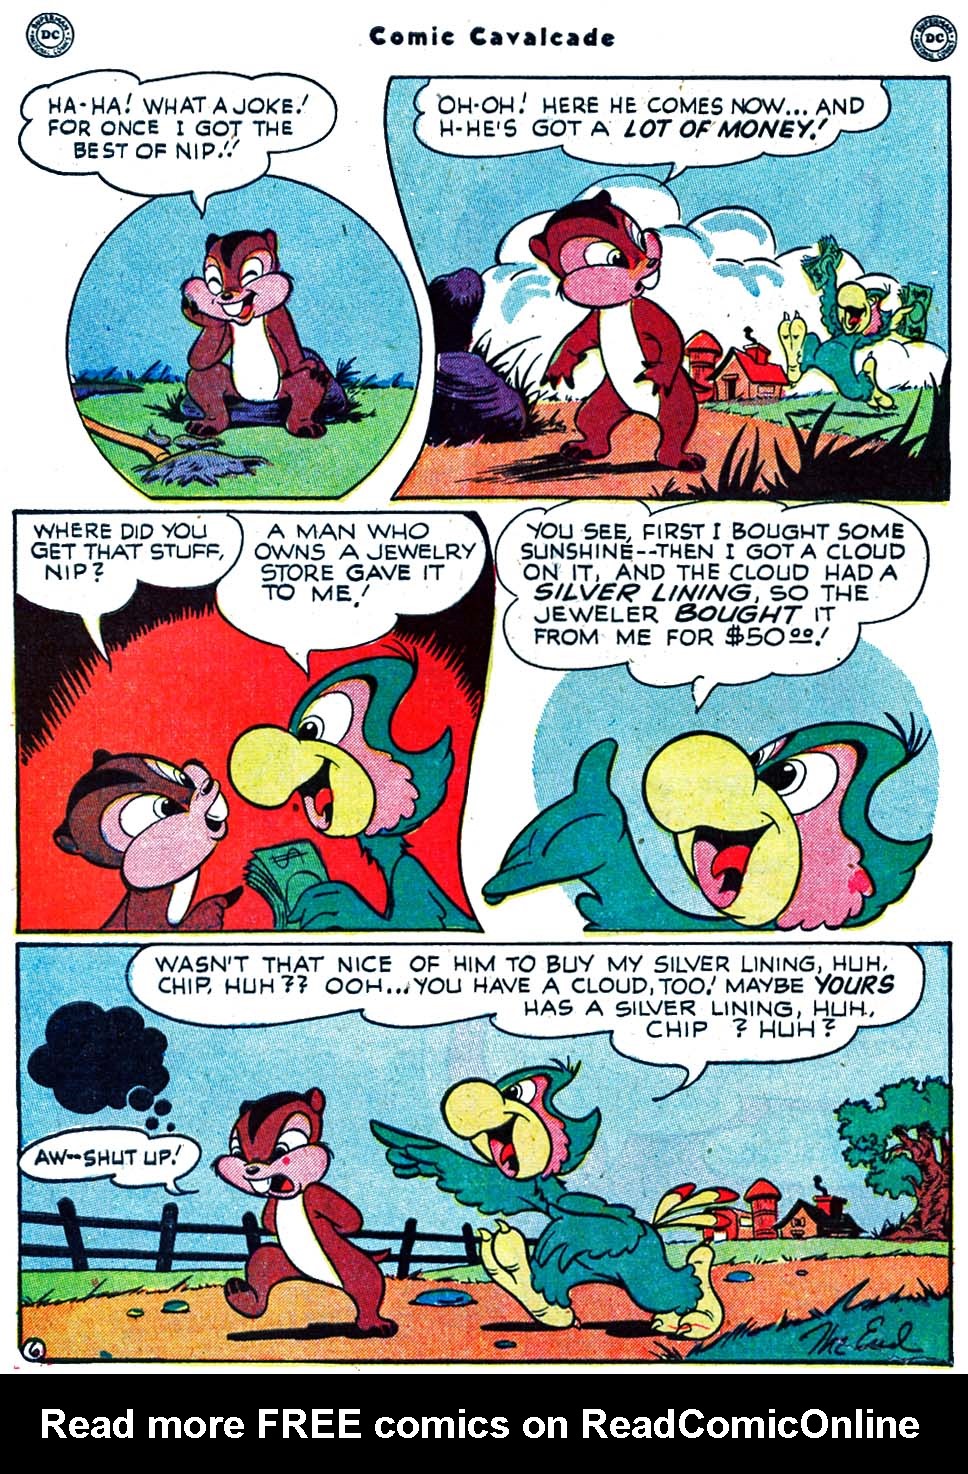 Comic Cavalcade issue 39 - Page 56